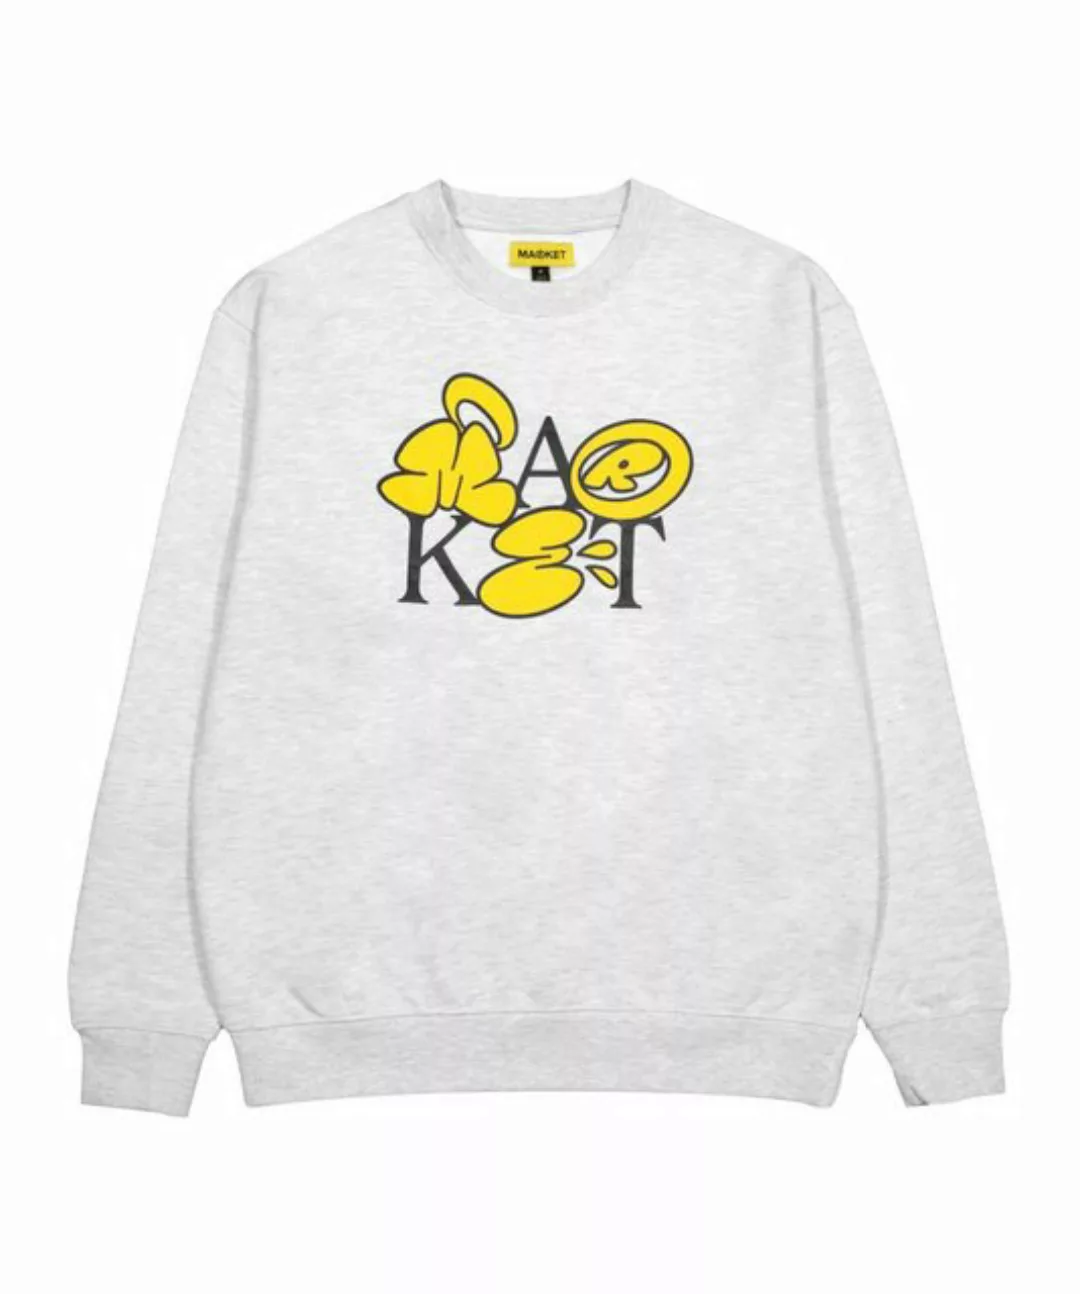 Market Sweatshirt Bubble Letter Crewneck Sweatshirt günstig online kaufen